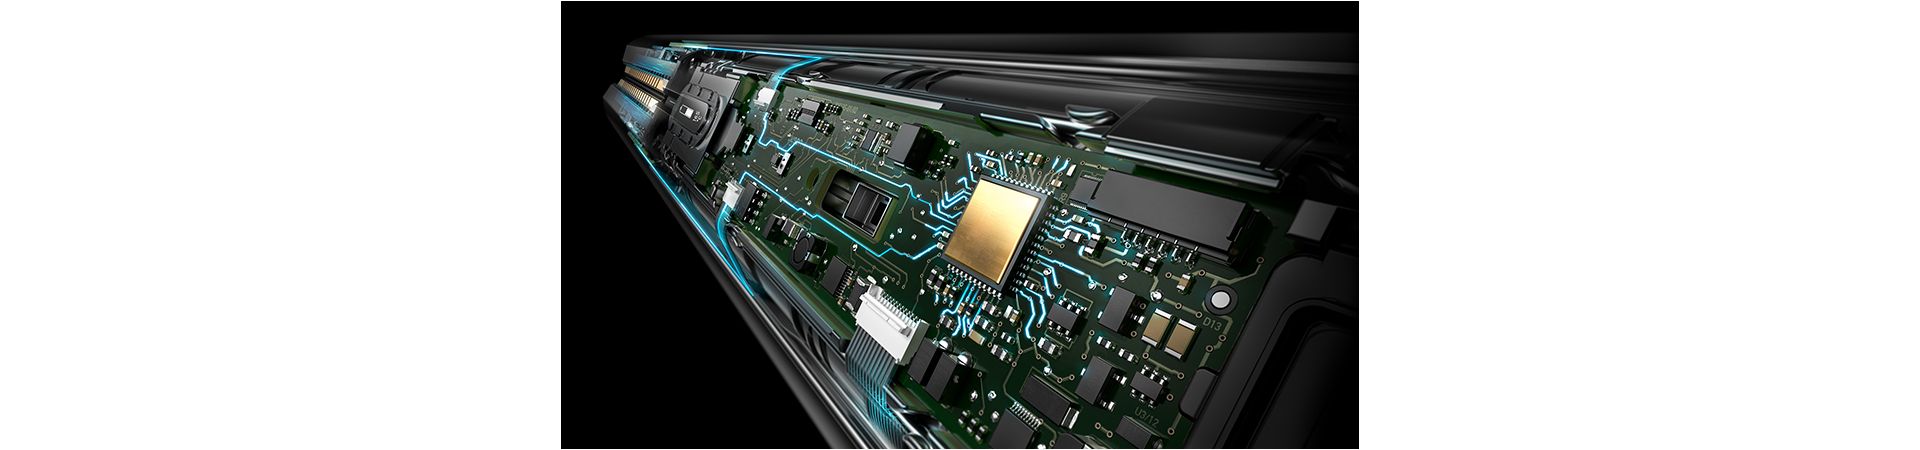 Tech image of intelligent microprocessors